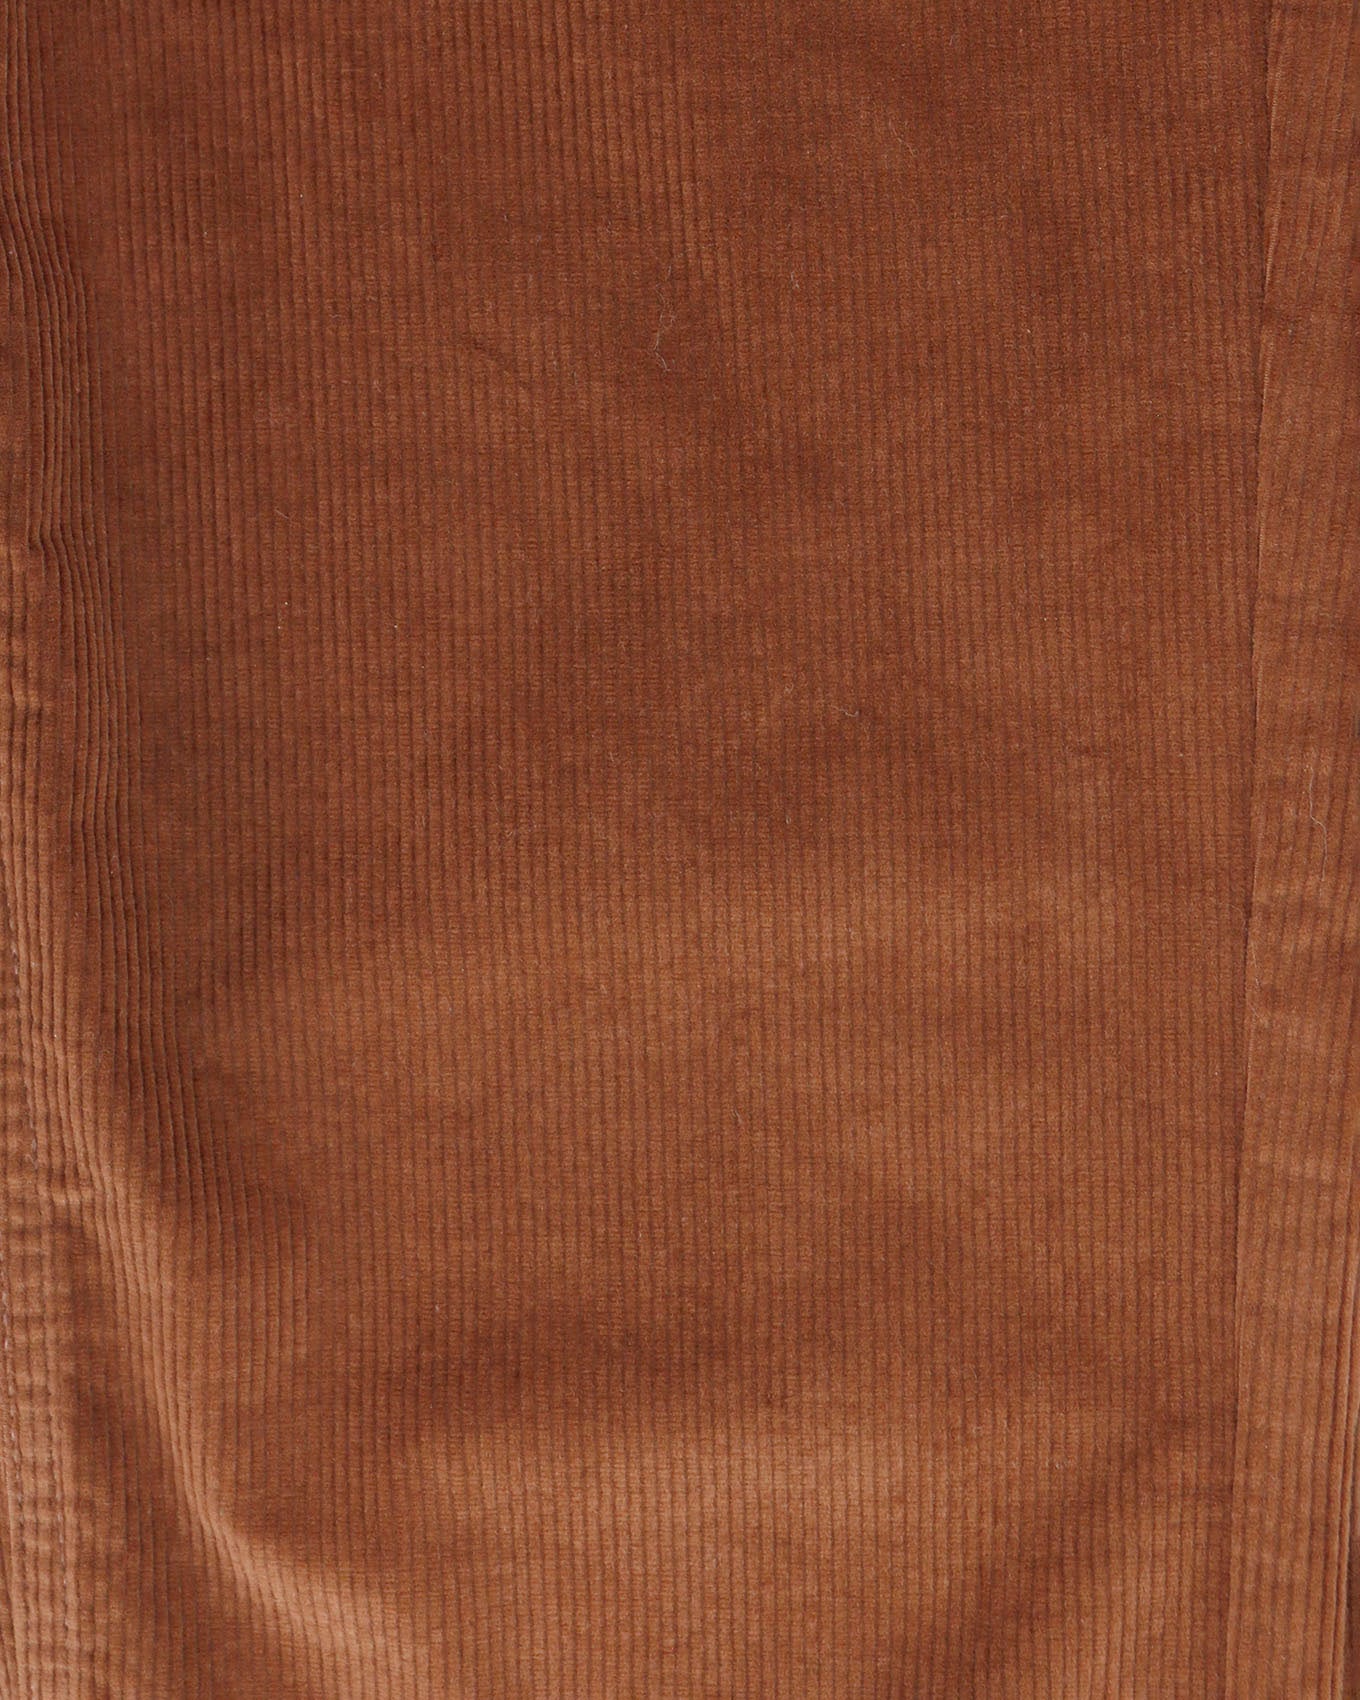 view of straight leg corduroy pants fabric